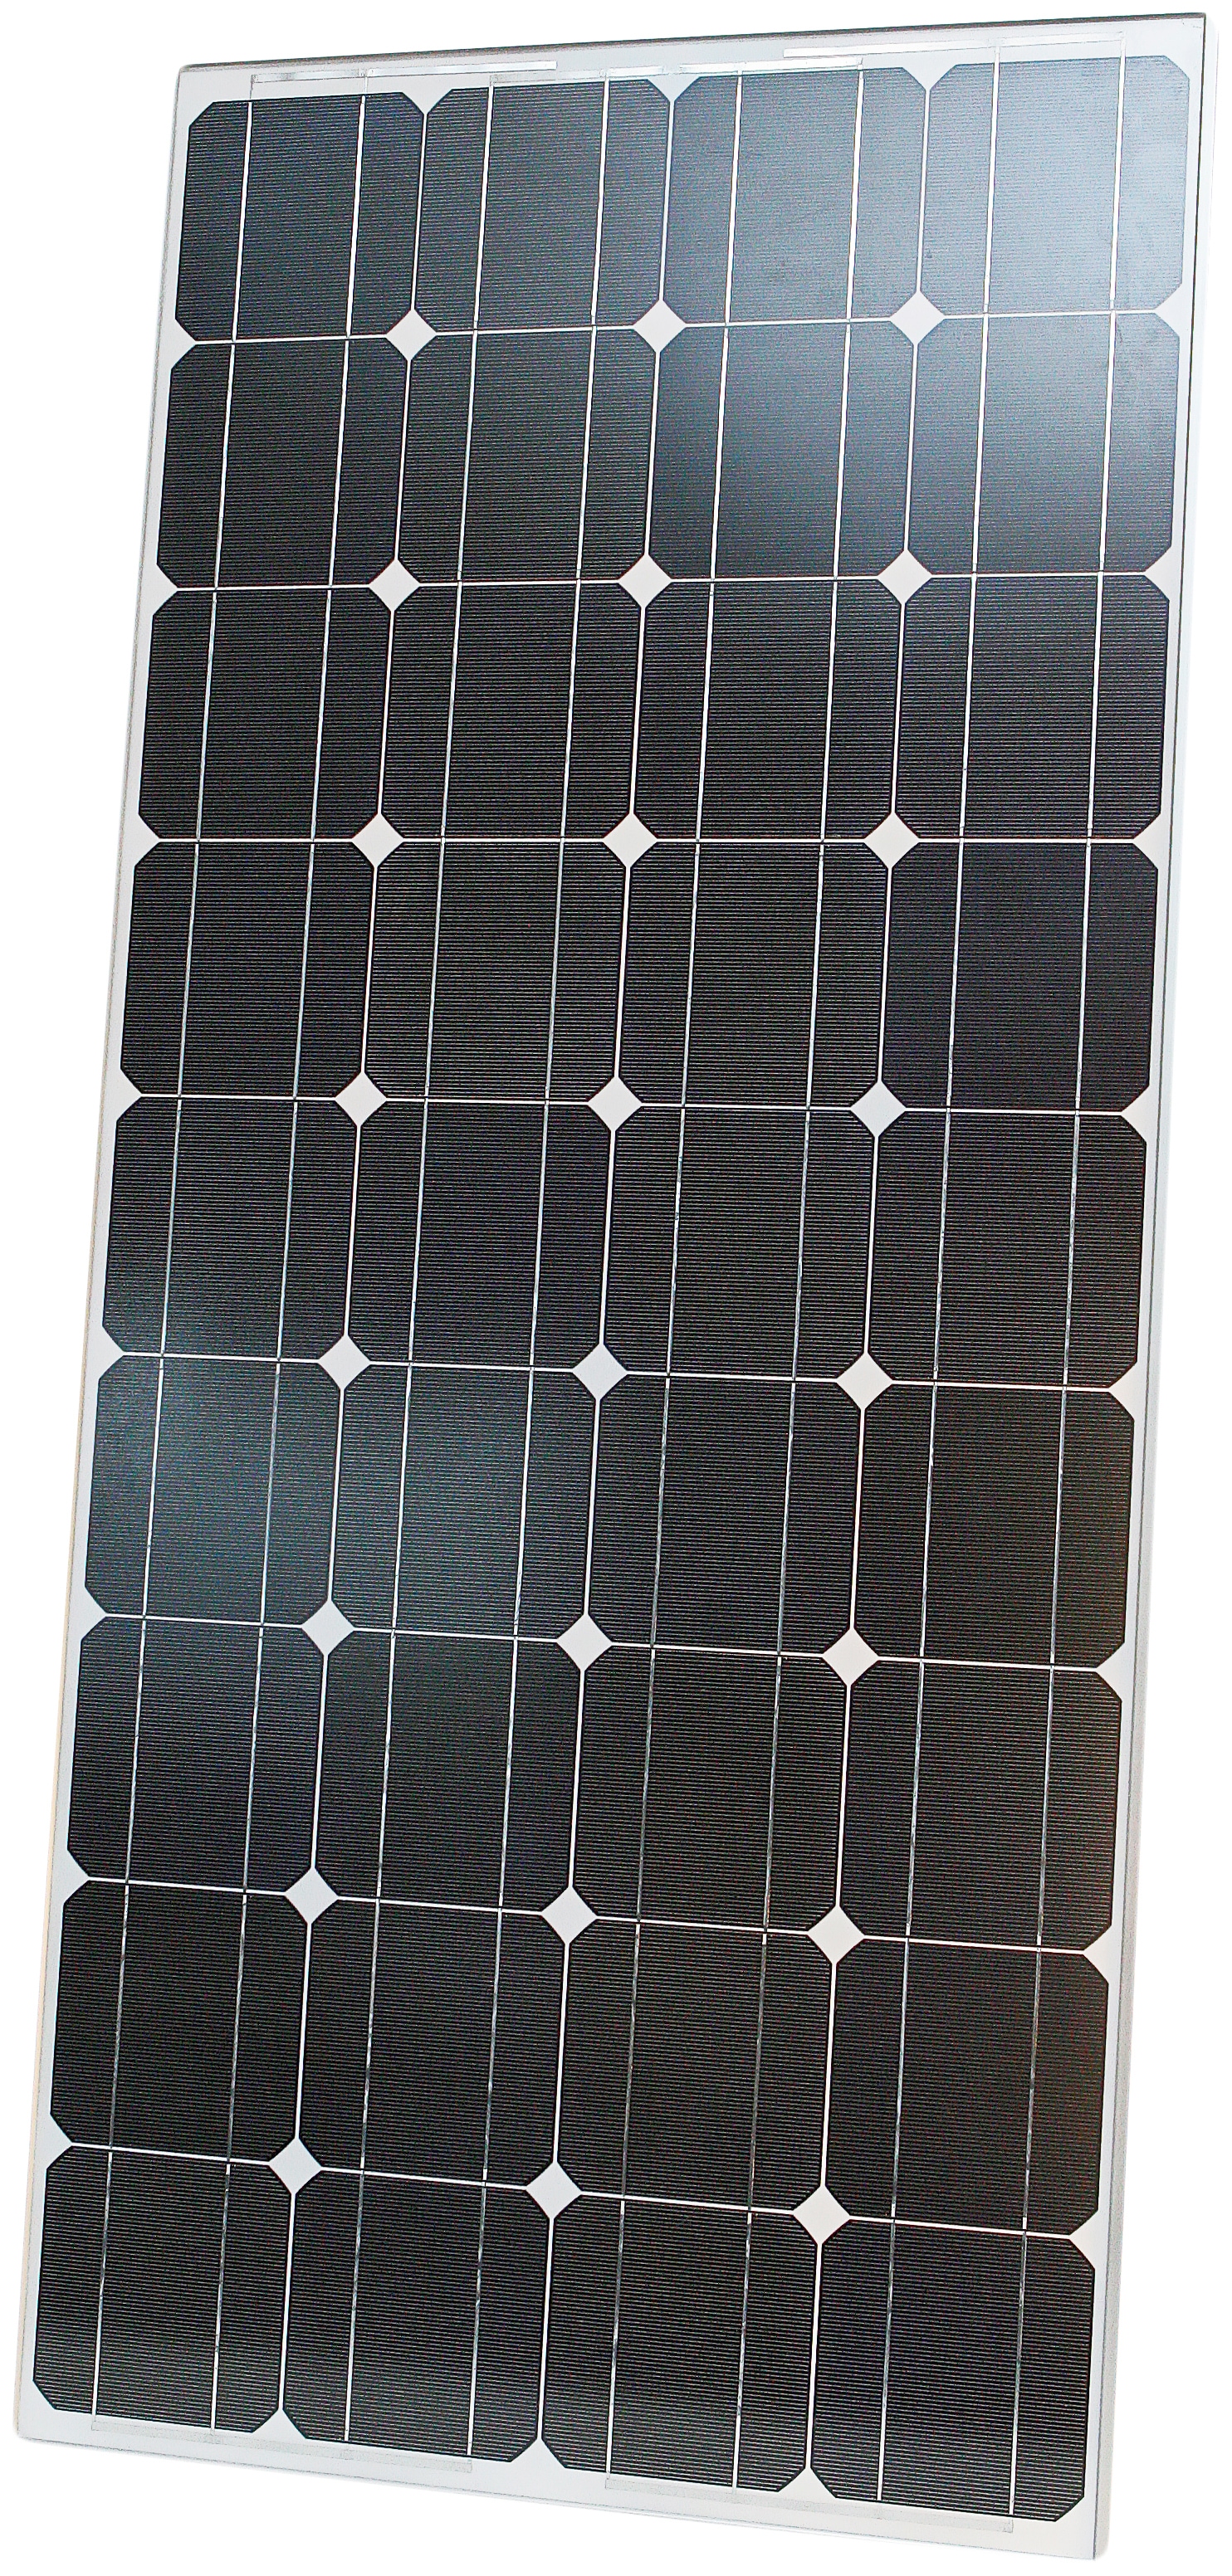 Sunset Solarmodul "AS 180, 180 Watt", für Gartenhäuser oder Reisemobil